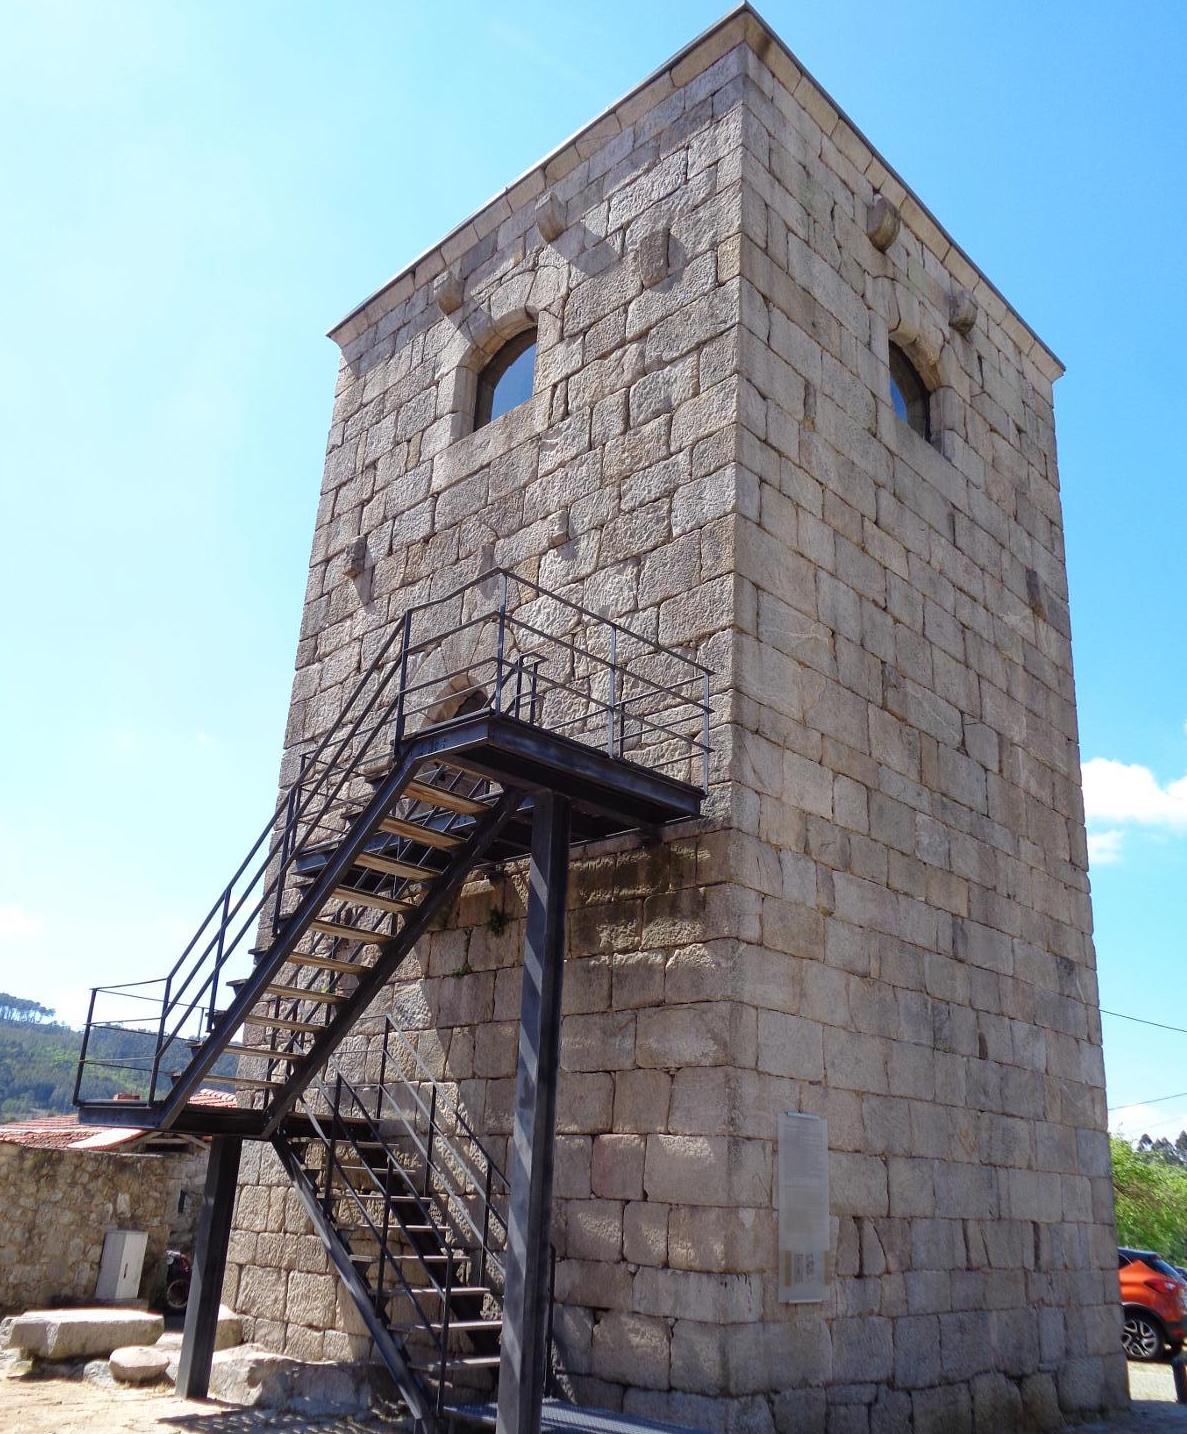 Torre Medieval de Alcofra